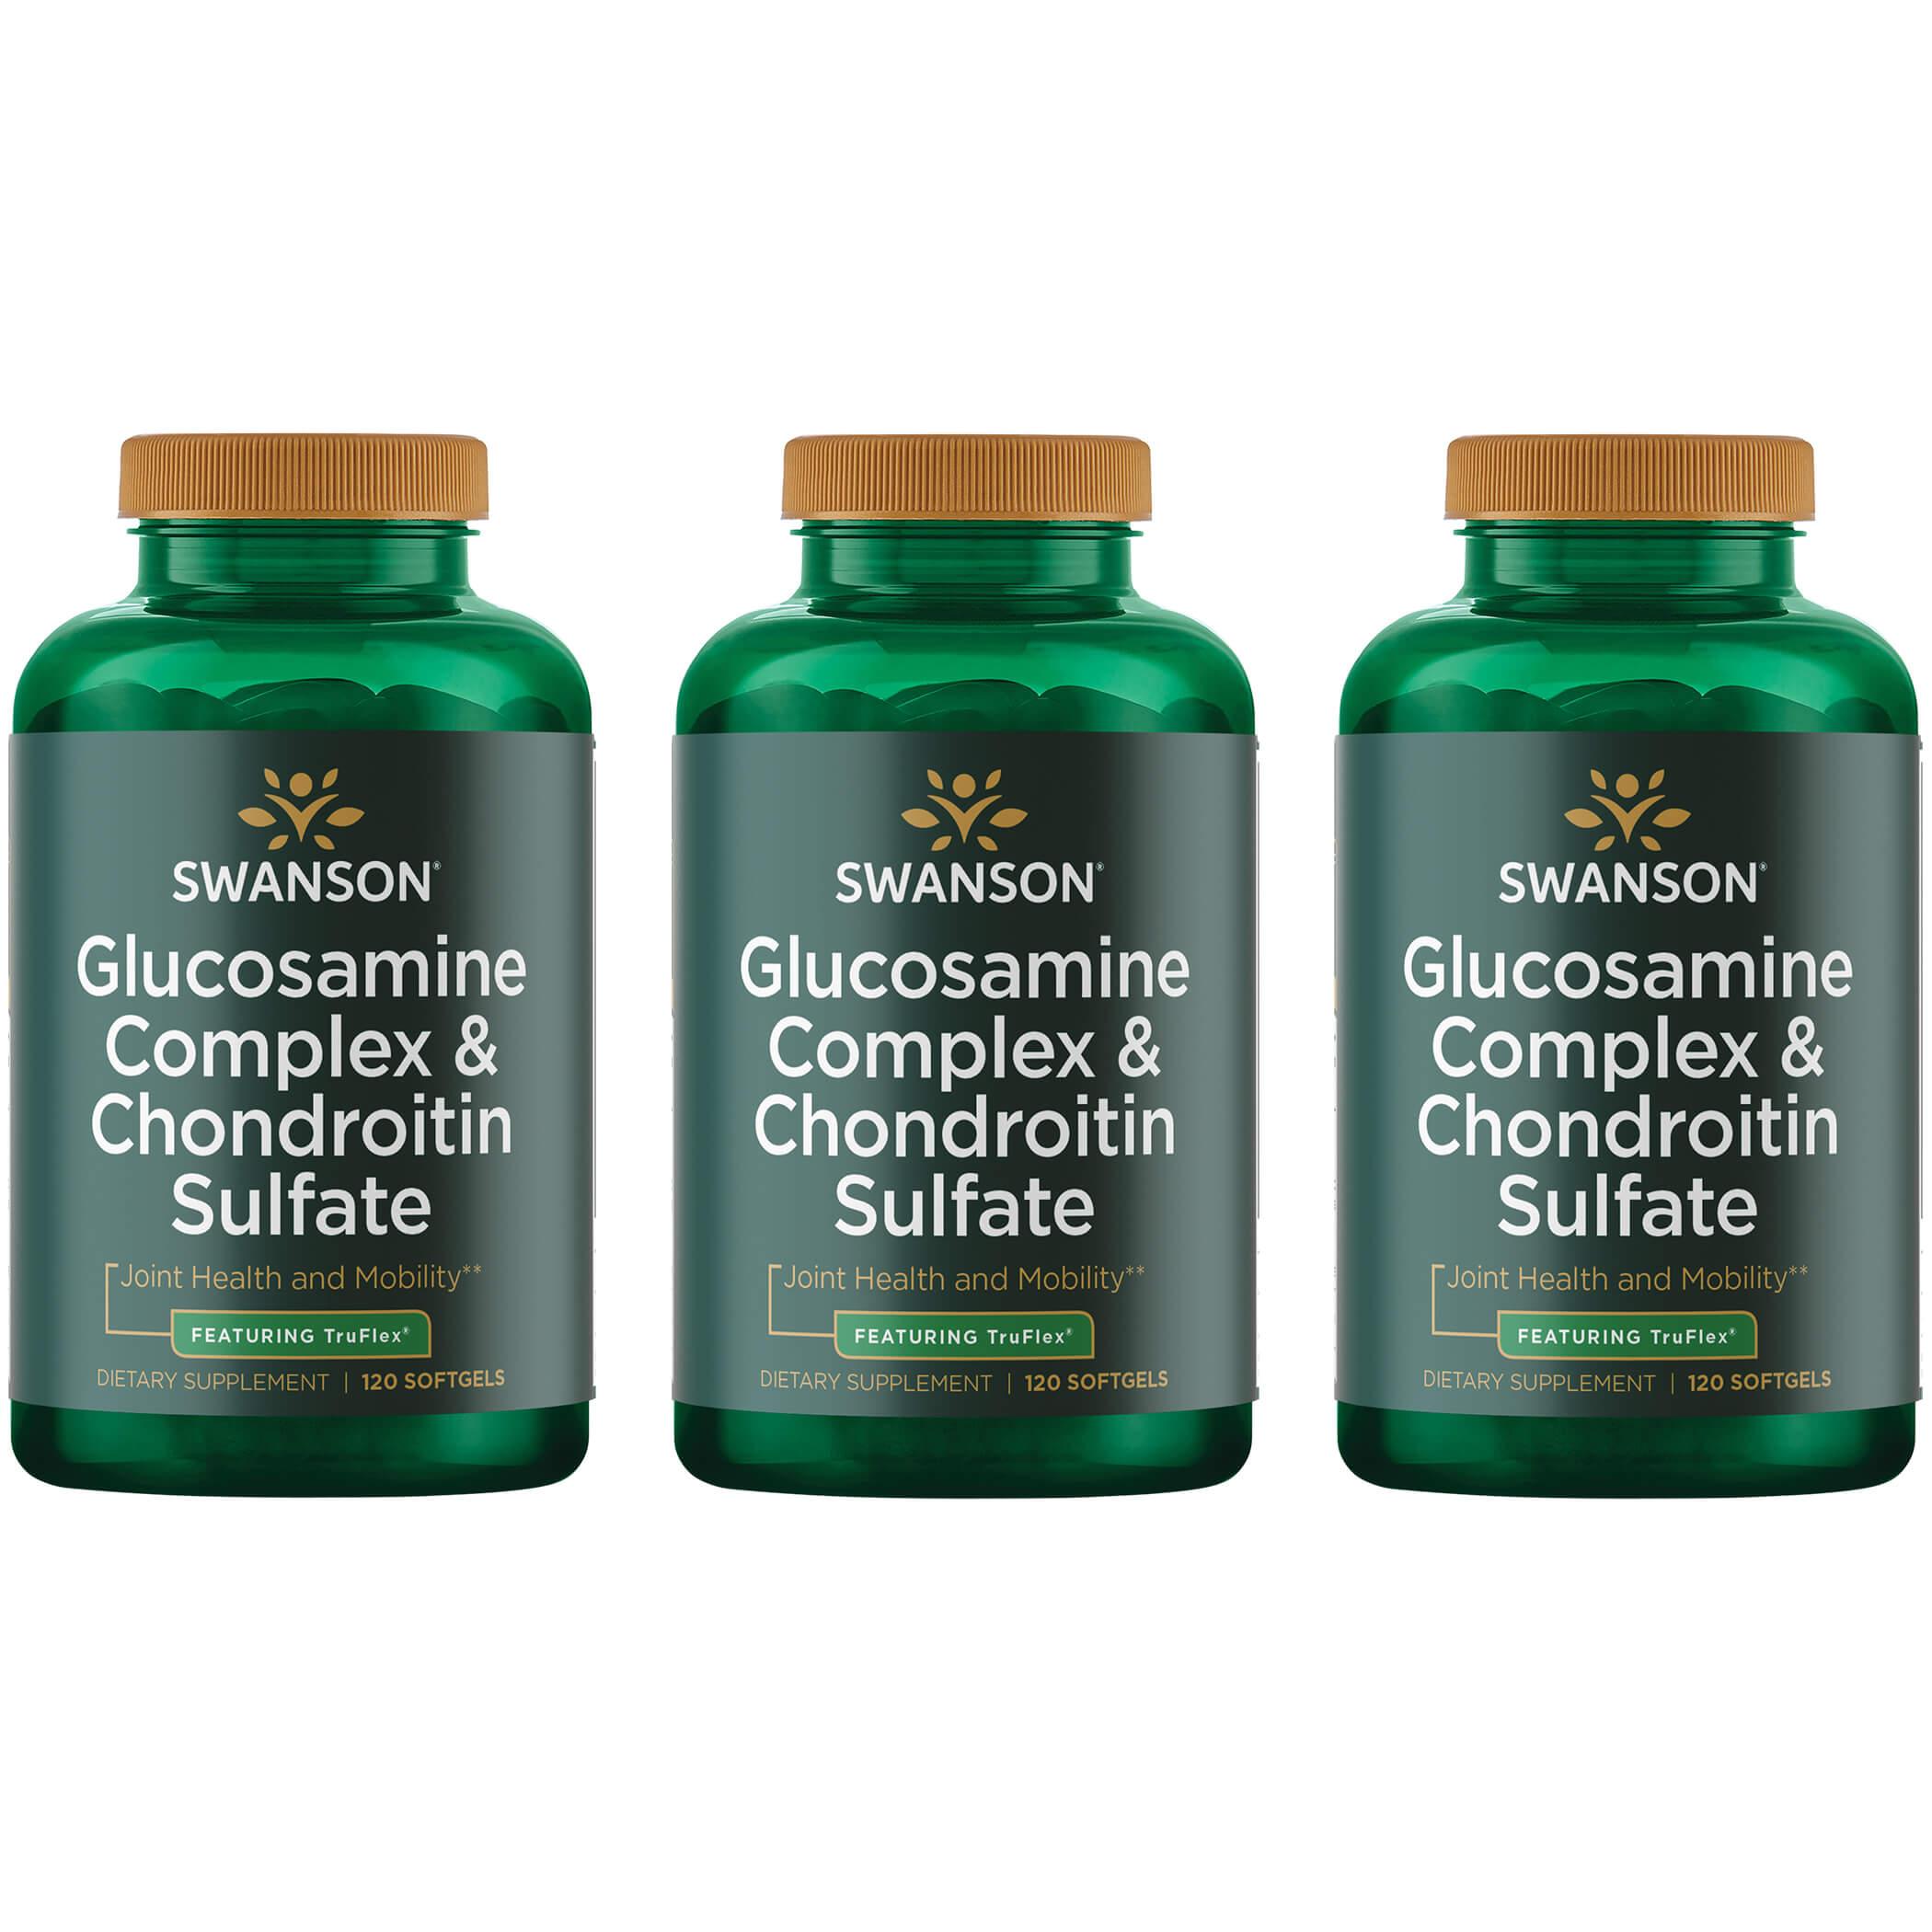 Swanson Ultra Glucosamine Complex & Chondroitin Sulfate - Featuring Truflex 3 Pack Supplement Vitamin 120 Soft Gels